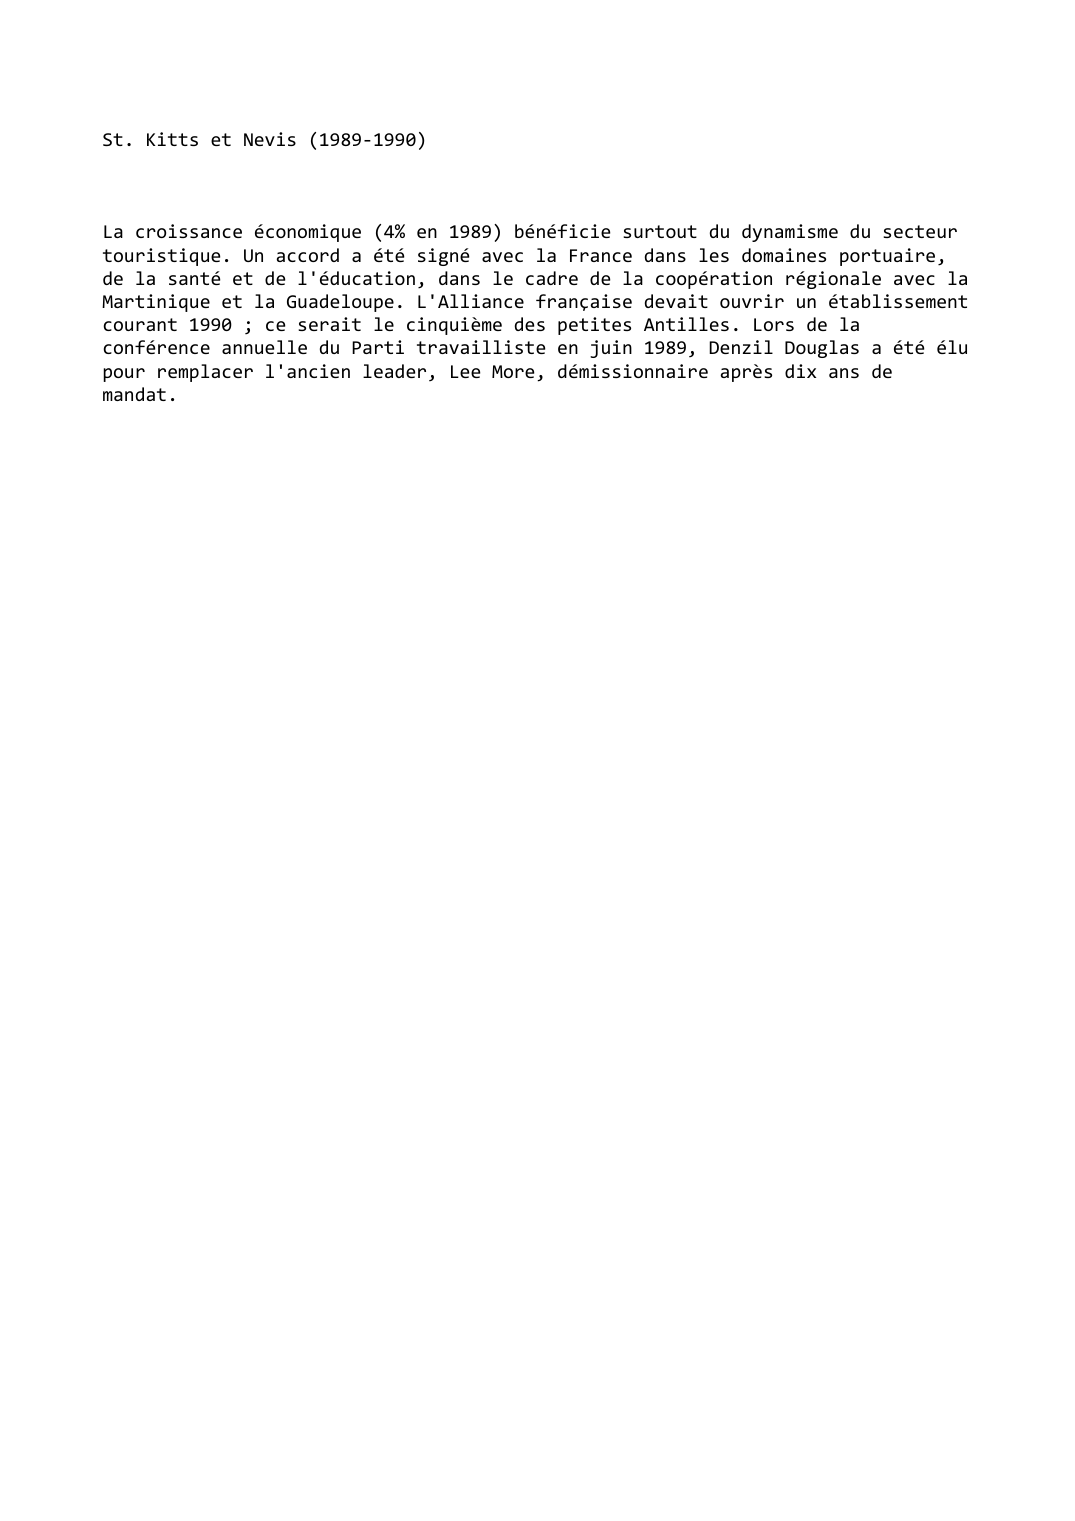 Prévisualisation du document St. Kitts et Nevis (1989-1990)